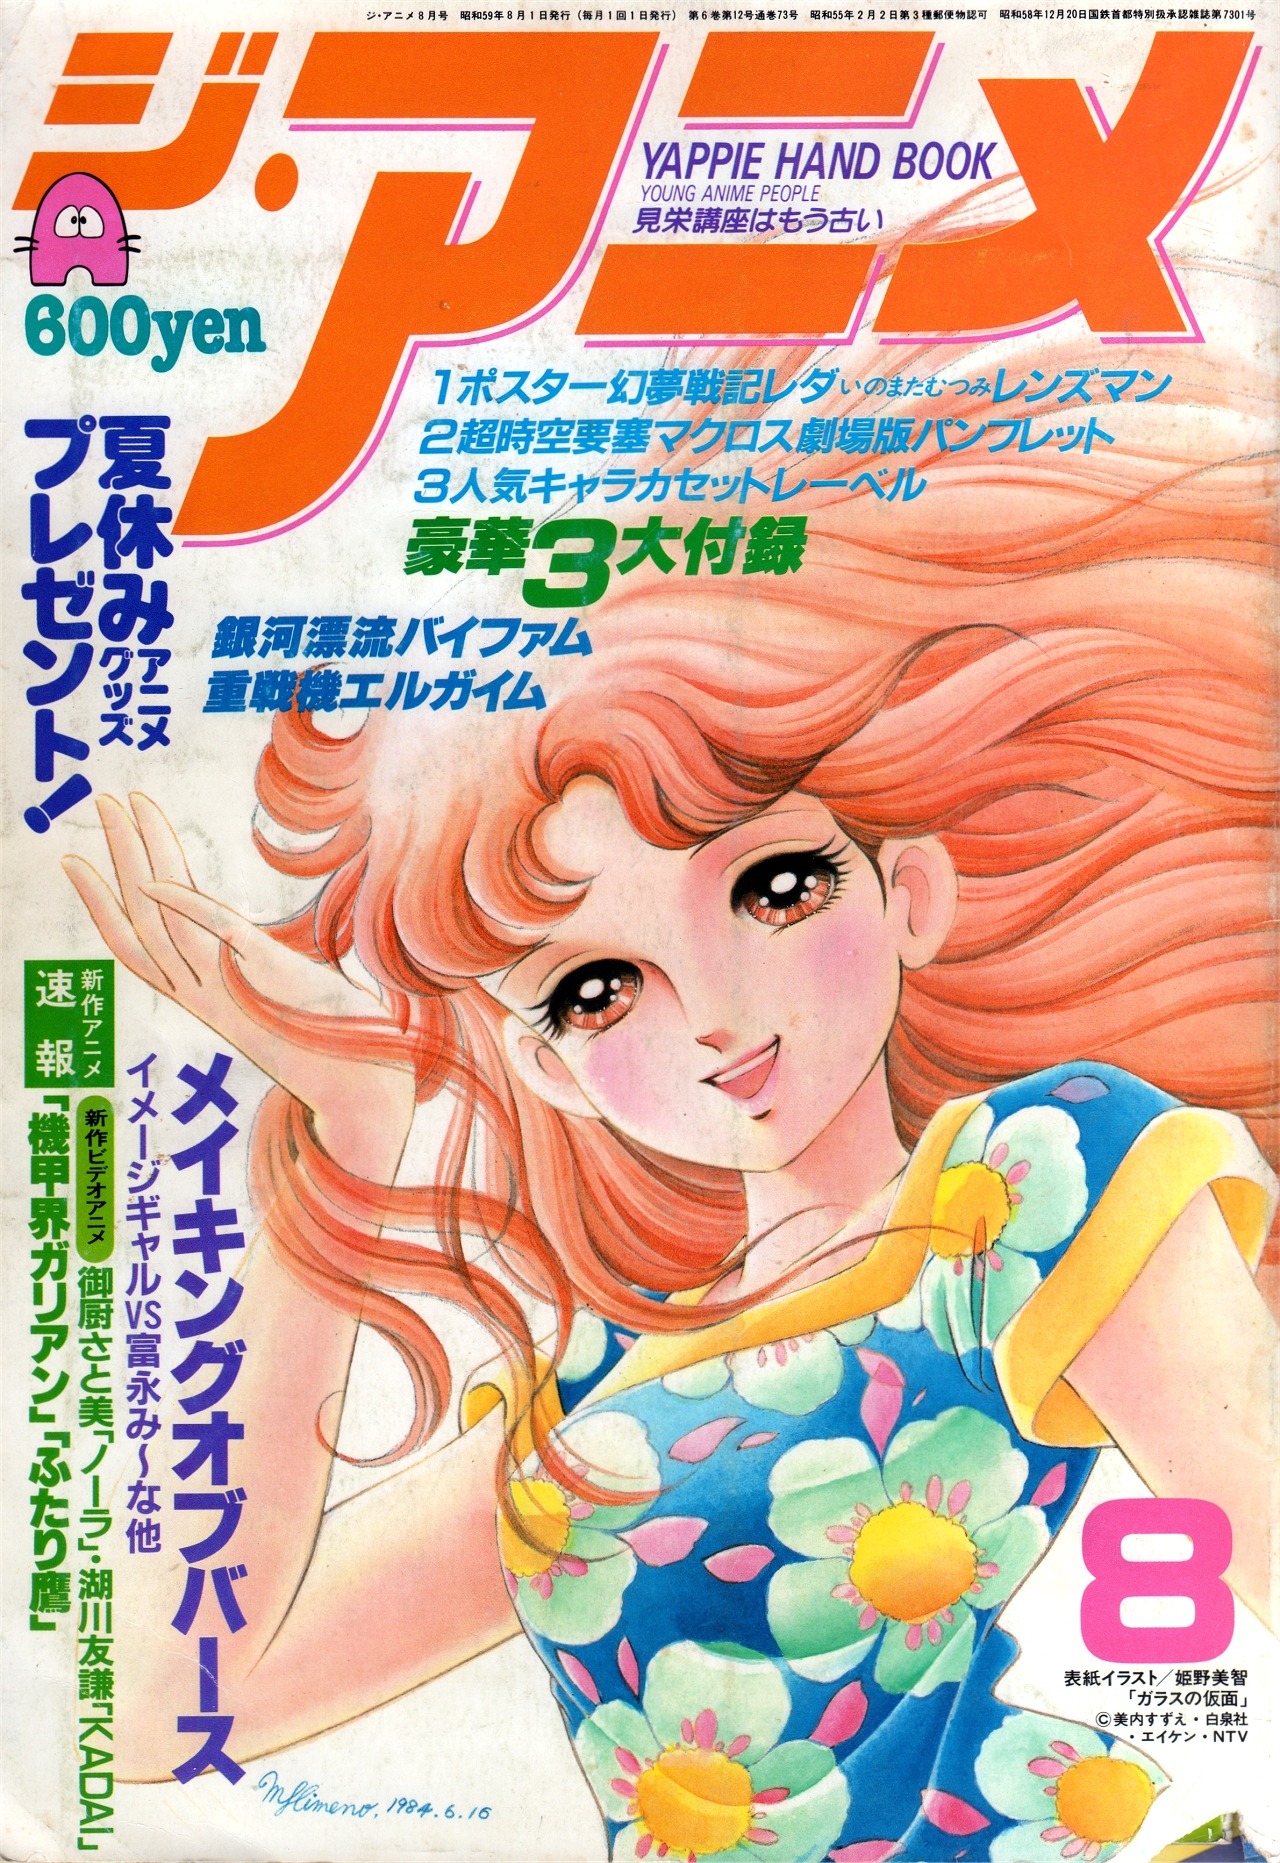 Anim Archive The Anime 08 1984 Maya Kitajima From Glass No